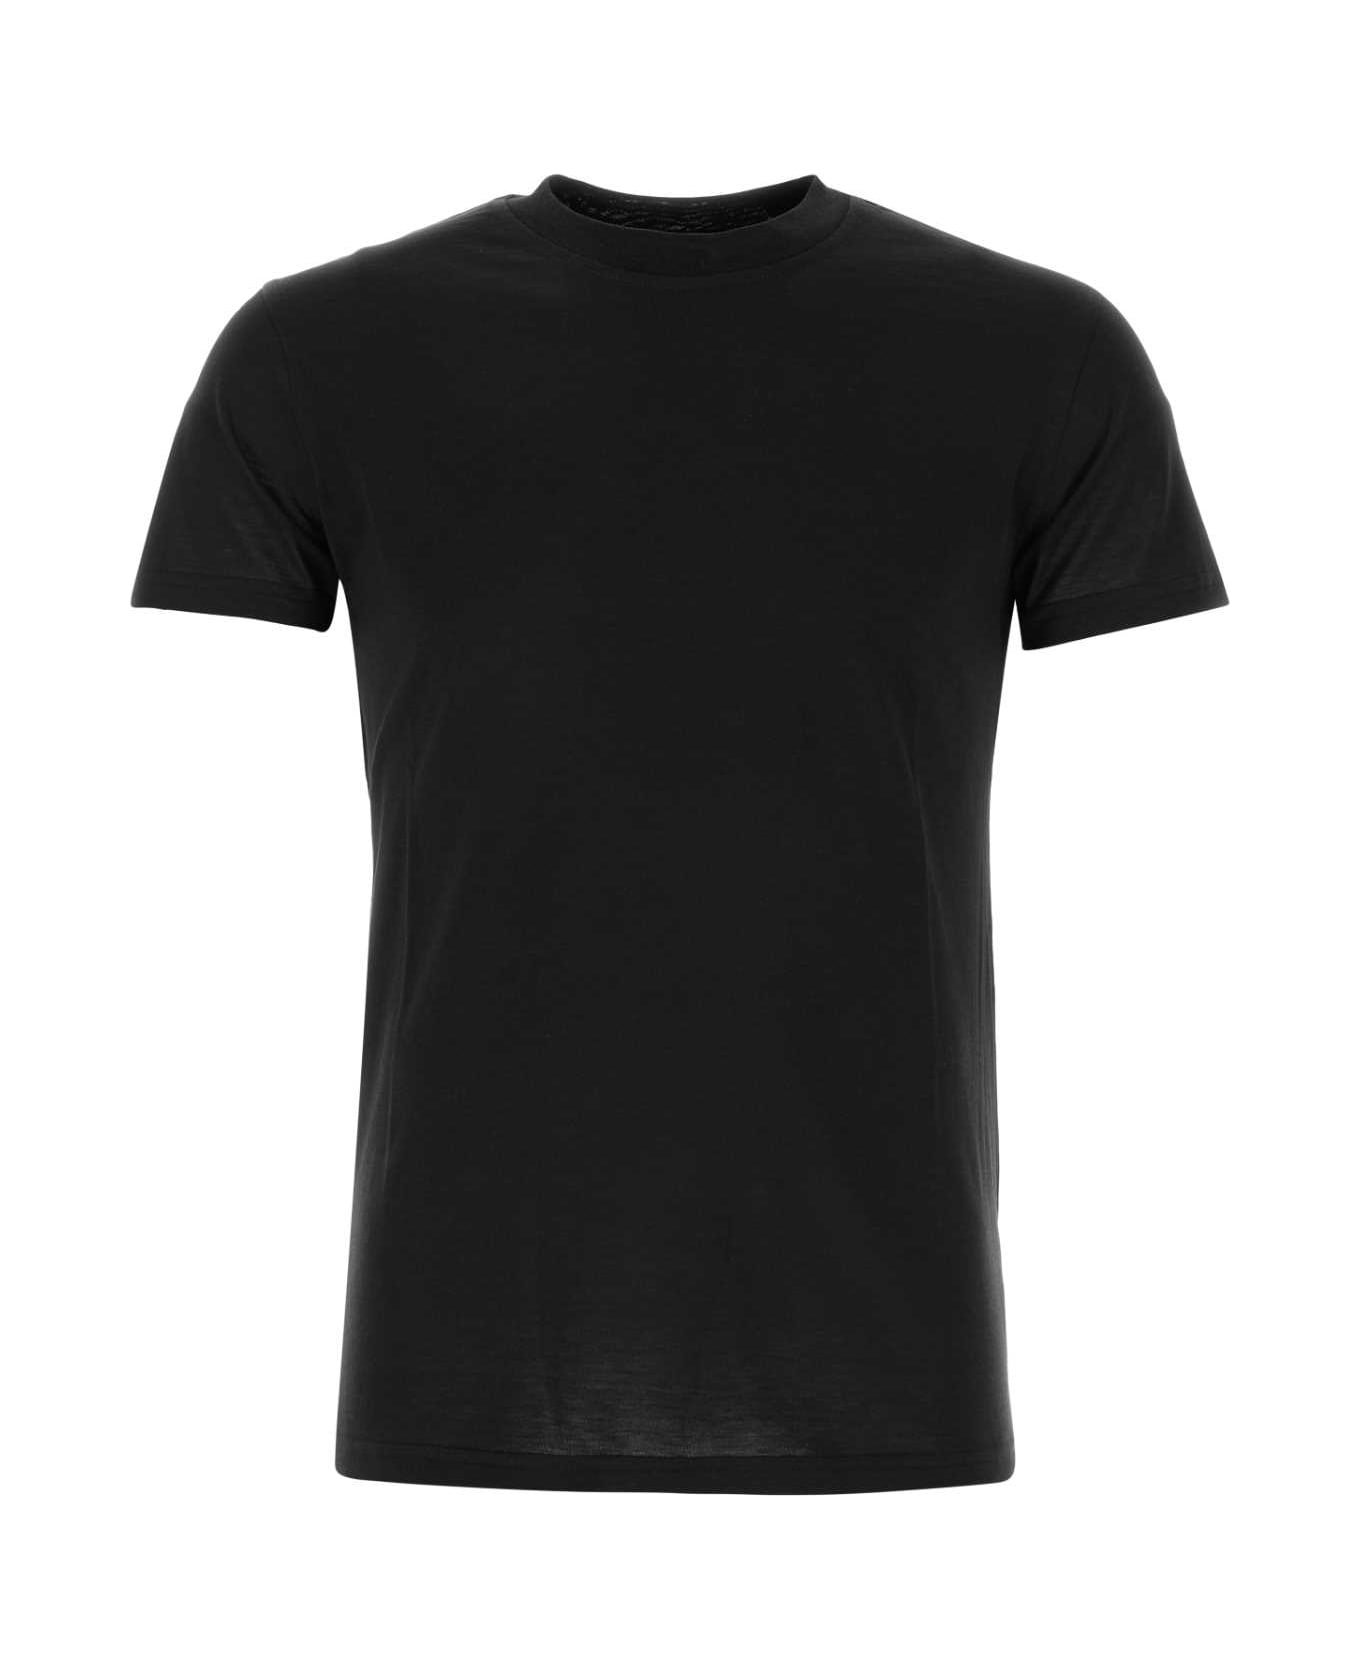 PT Torino Black Silk Blend T-shirt - NERO